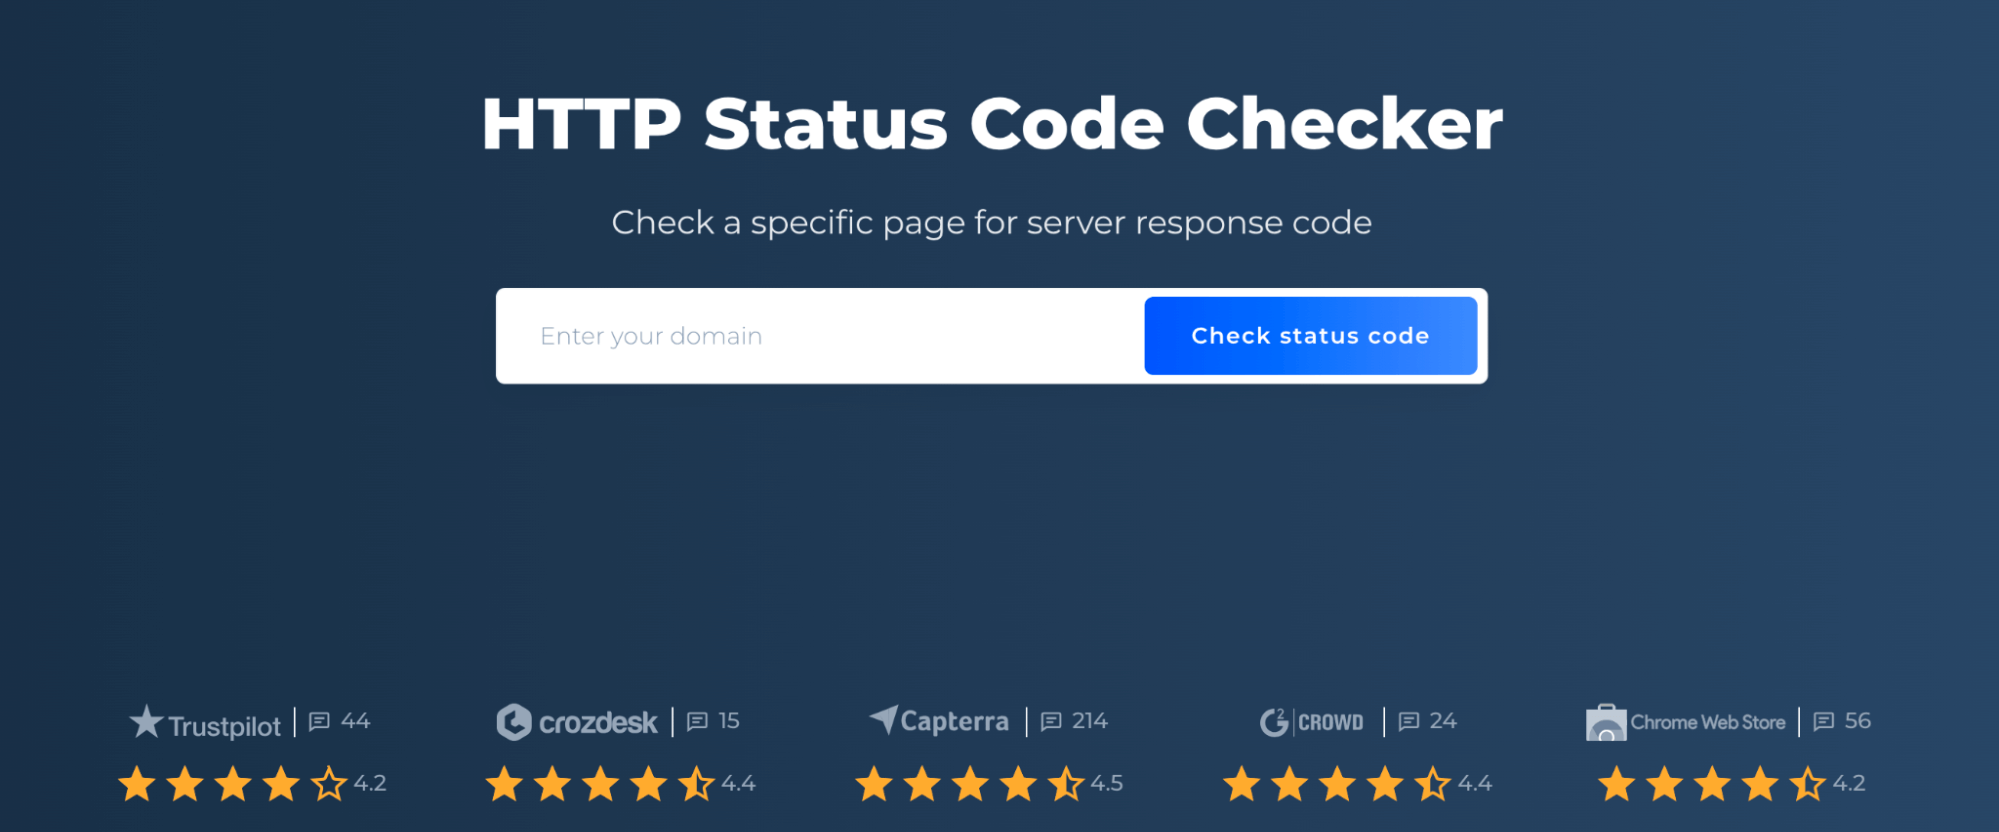 HTTP Status Code Checker Tool for Identifying HTTP 205 Status Code